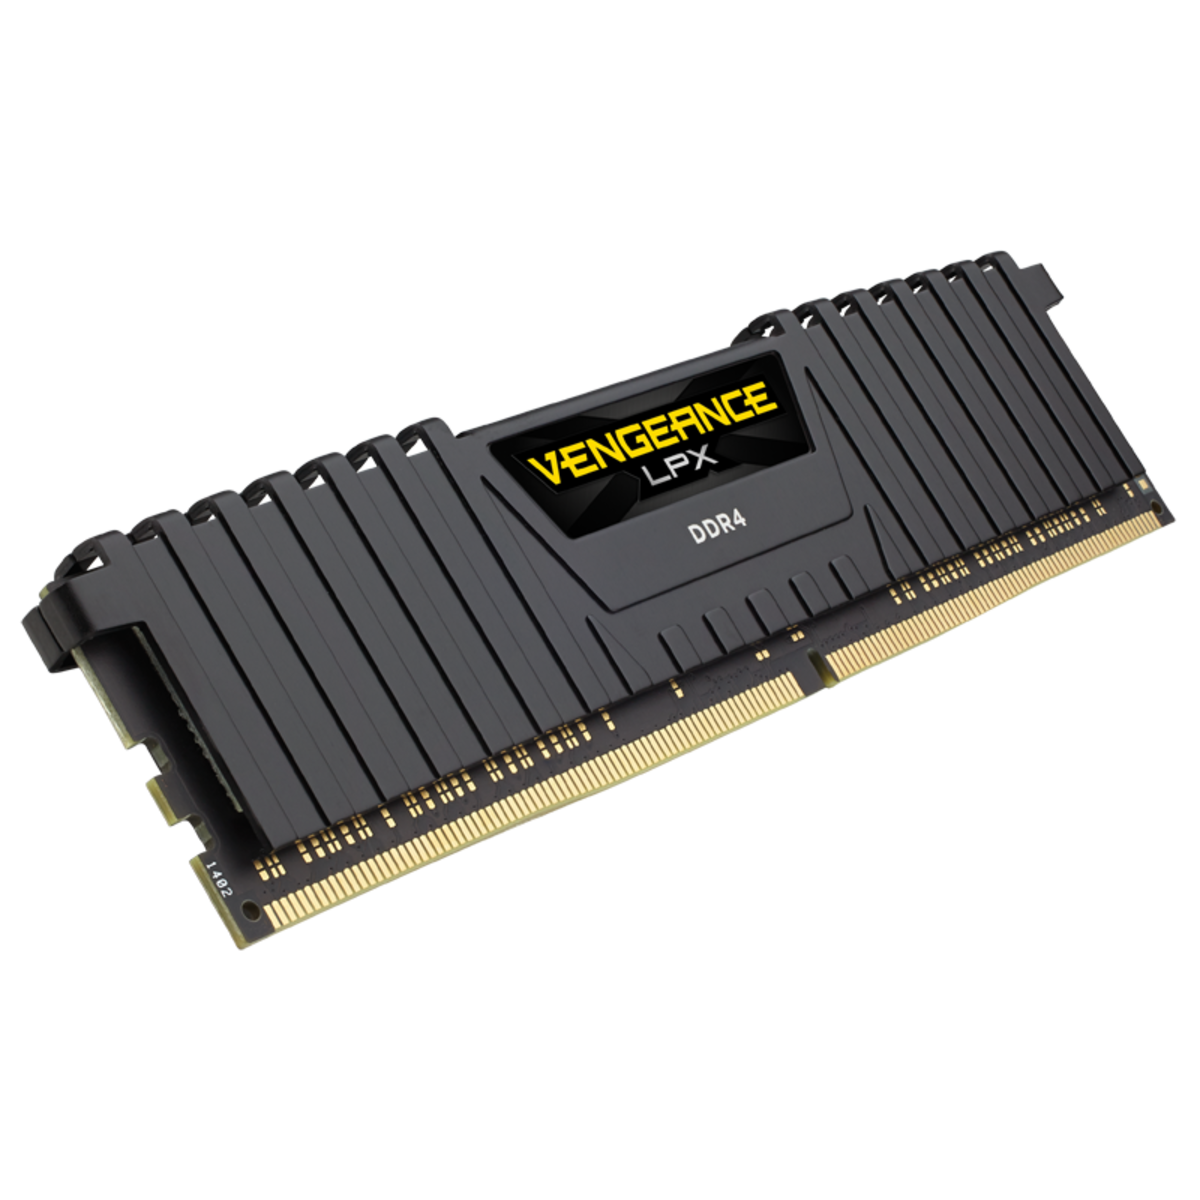 CORSAIR VENGEANCE LPX DDR4 16GB (16GB *1) 3200MHz MEMORY